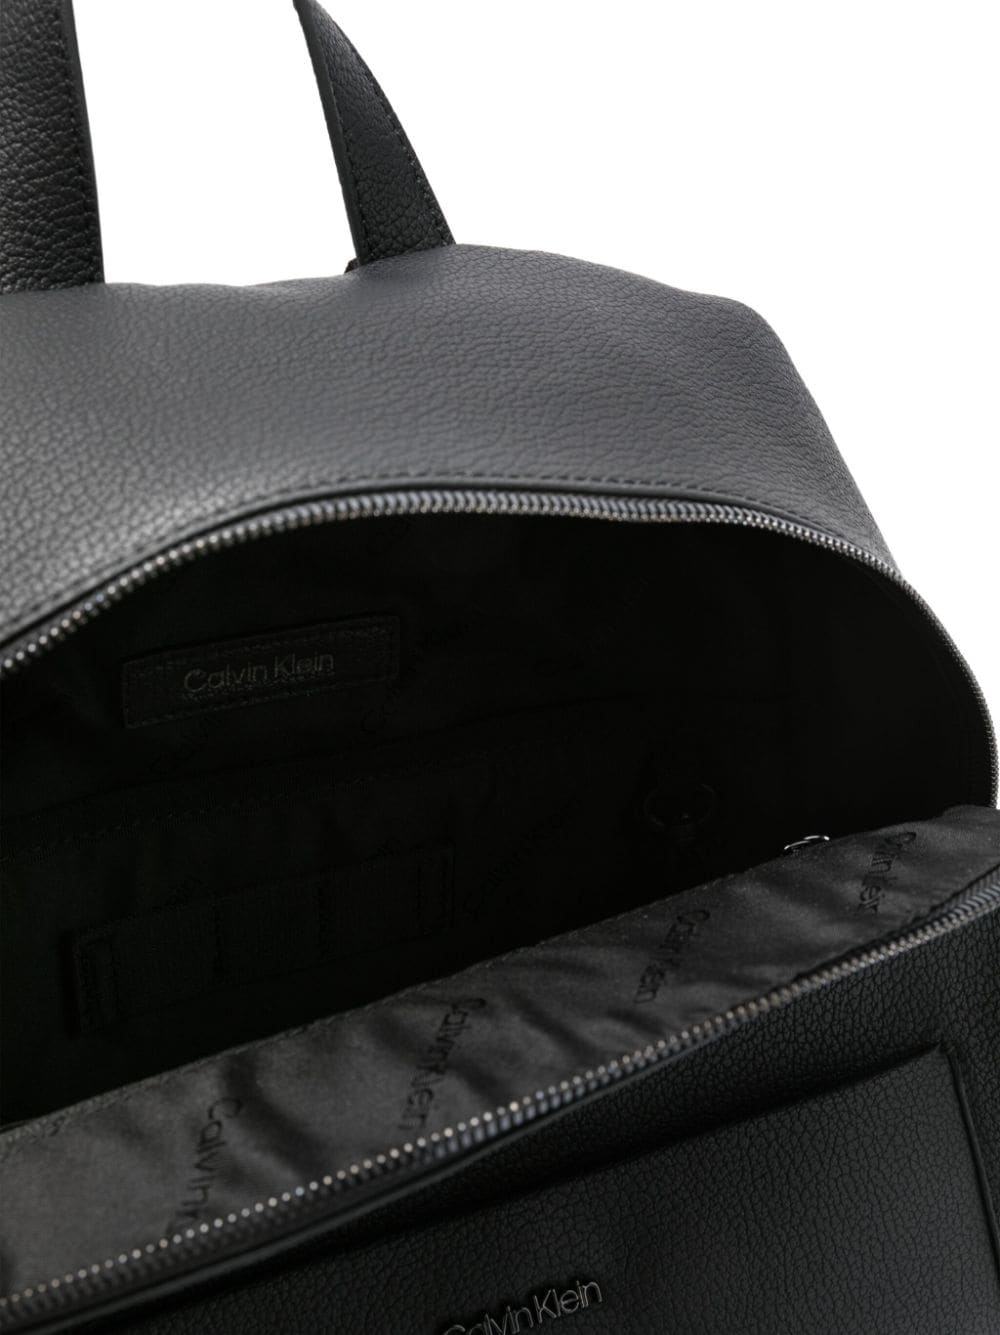 Calvin Klein, Bags, Black Faux Leather Calvin Klein Fragrances Bag